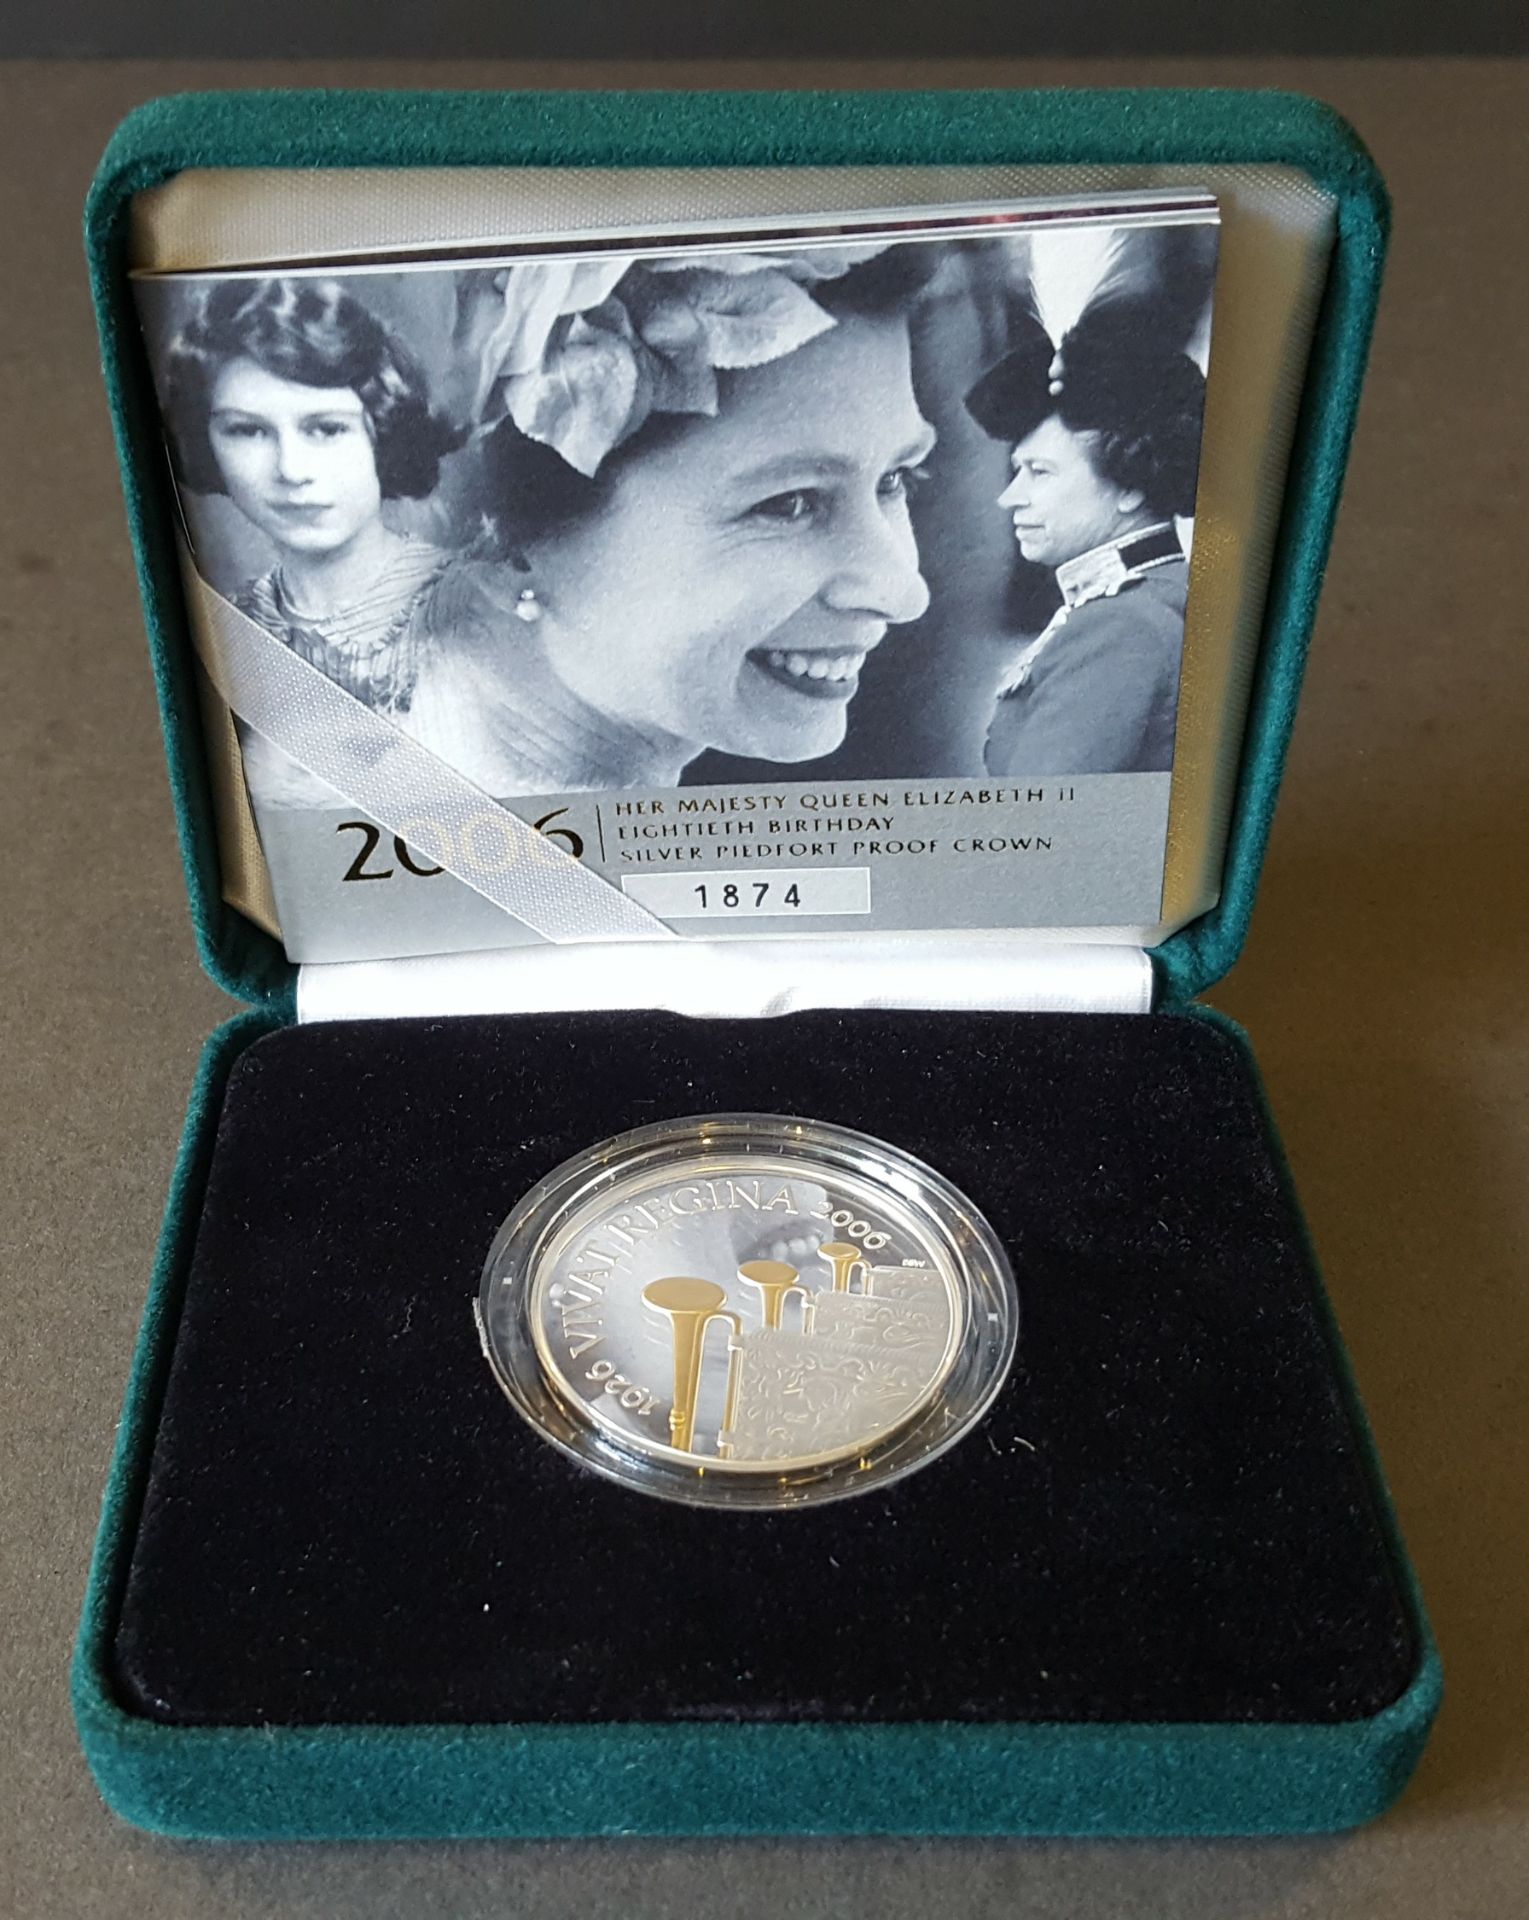 Collectable Proof Coin Silver Piedfort Proof Crown 2006 Queen Elizabeth II 80th Birthday